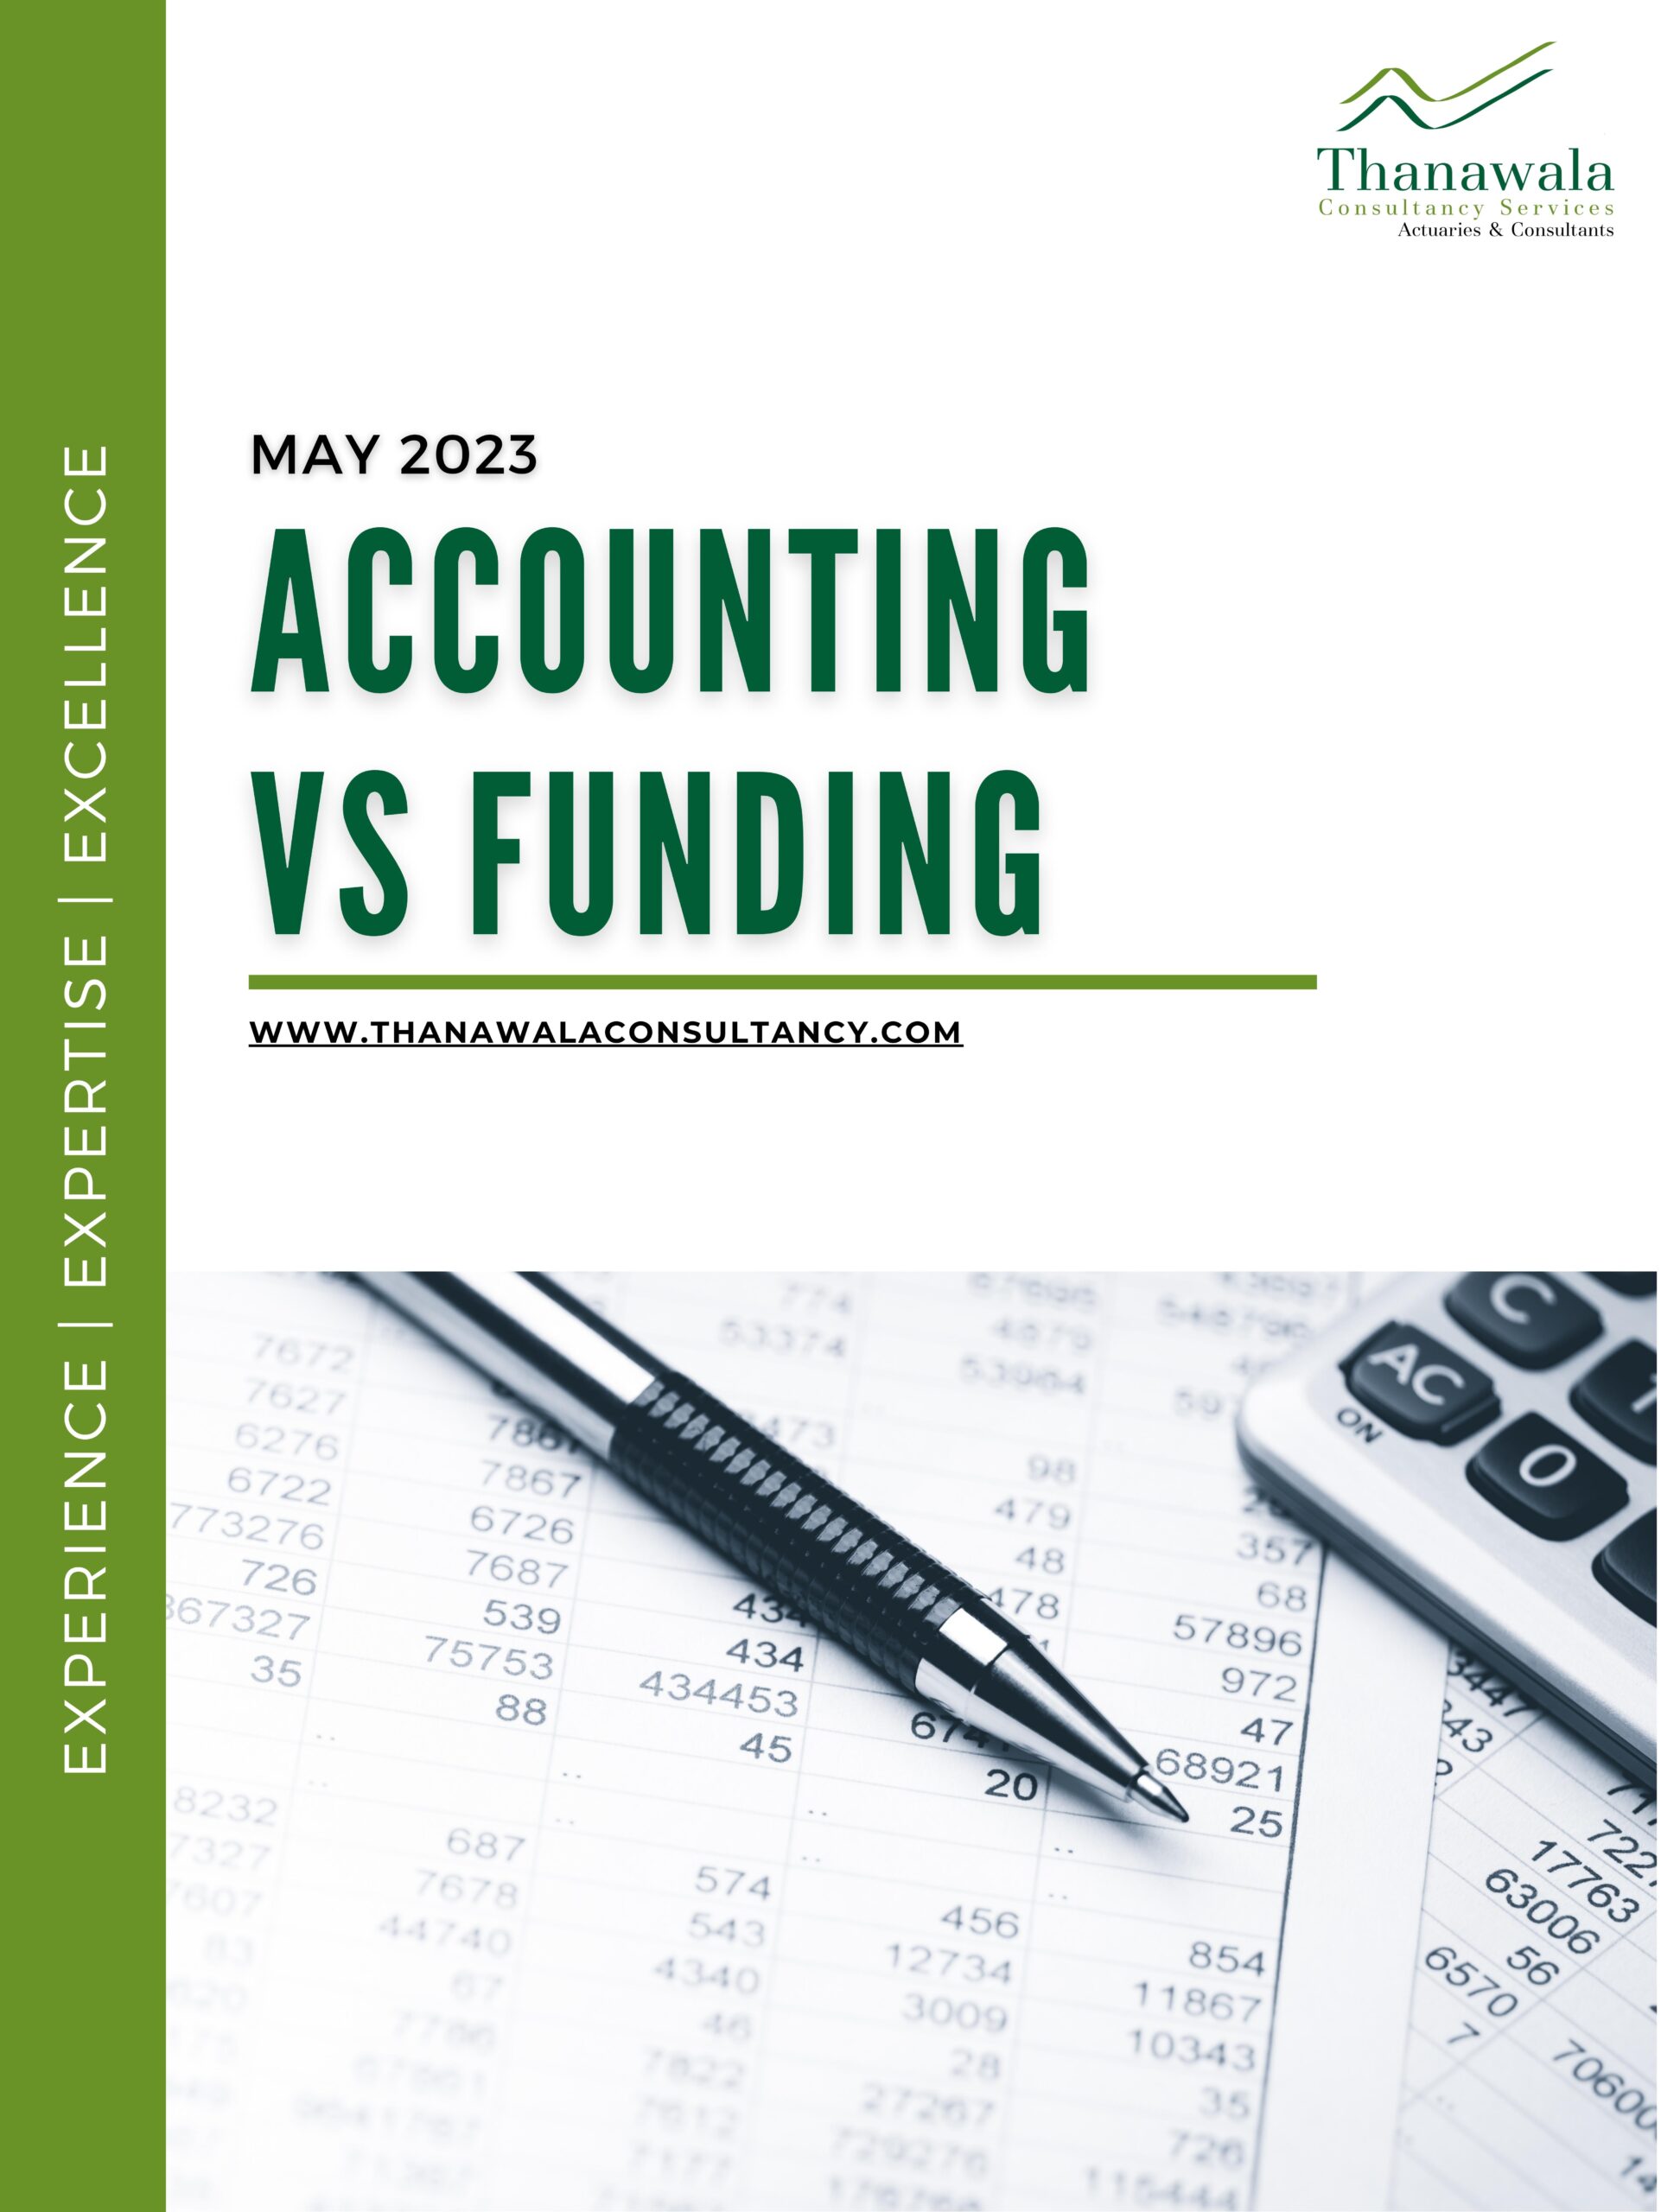 https://thanawalaconsultancy.com/wp-content/uploads/2023/05/thanawala-accounting-vs-funding-cover-jpg-scaled.jpg